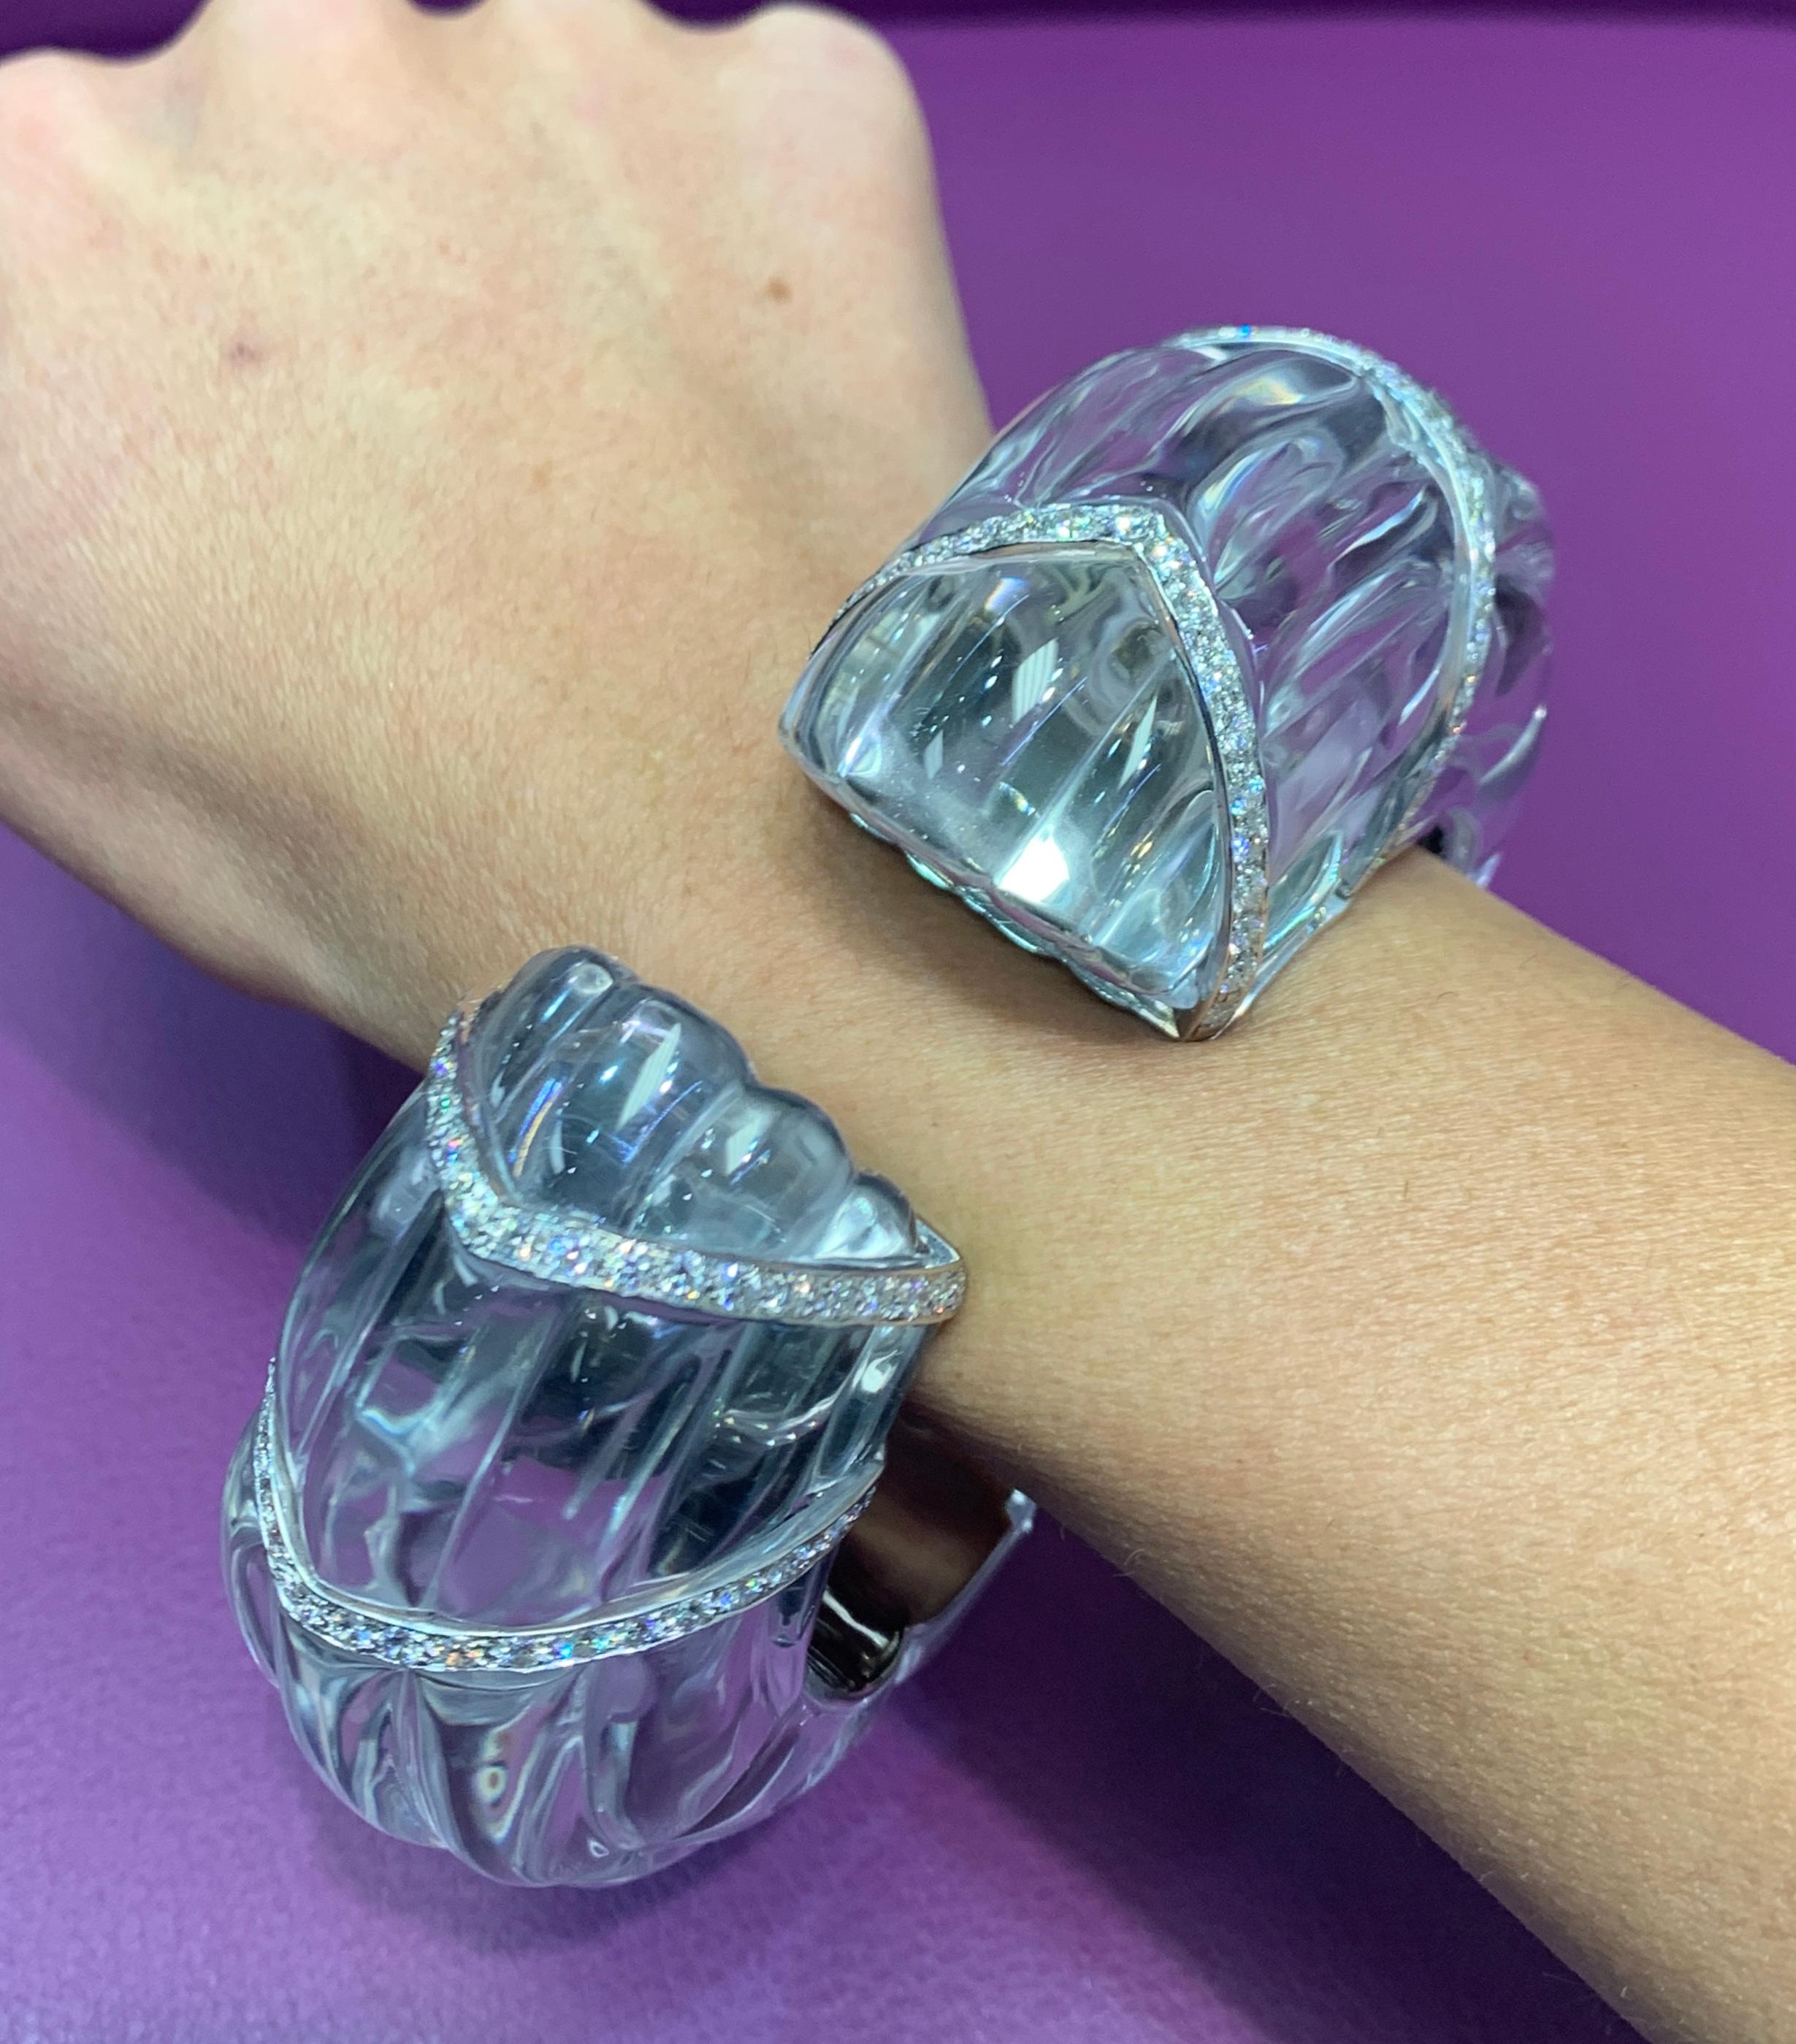 Rock Crystal & Diamond Oversized Cuff Bracelet

Gold Type: 18K White Gold 

Measurements: 2.5